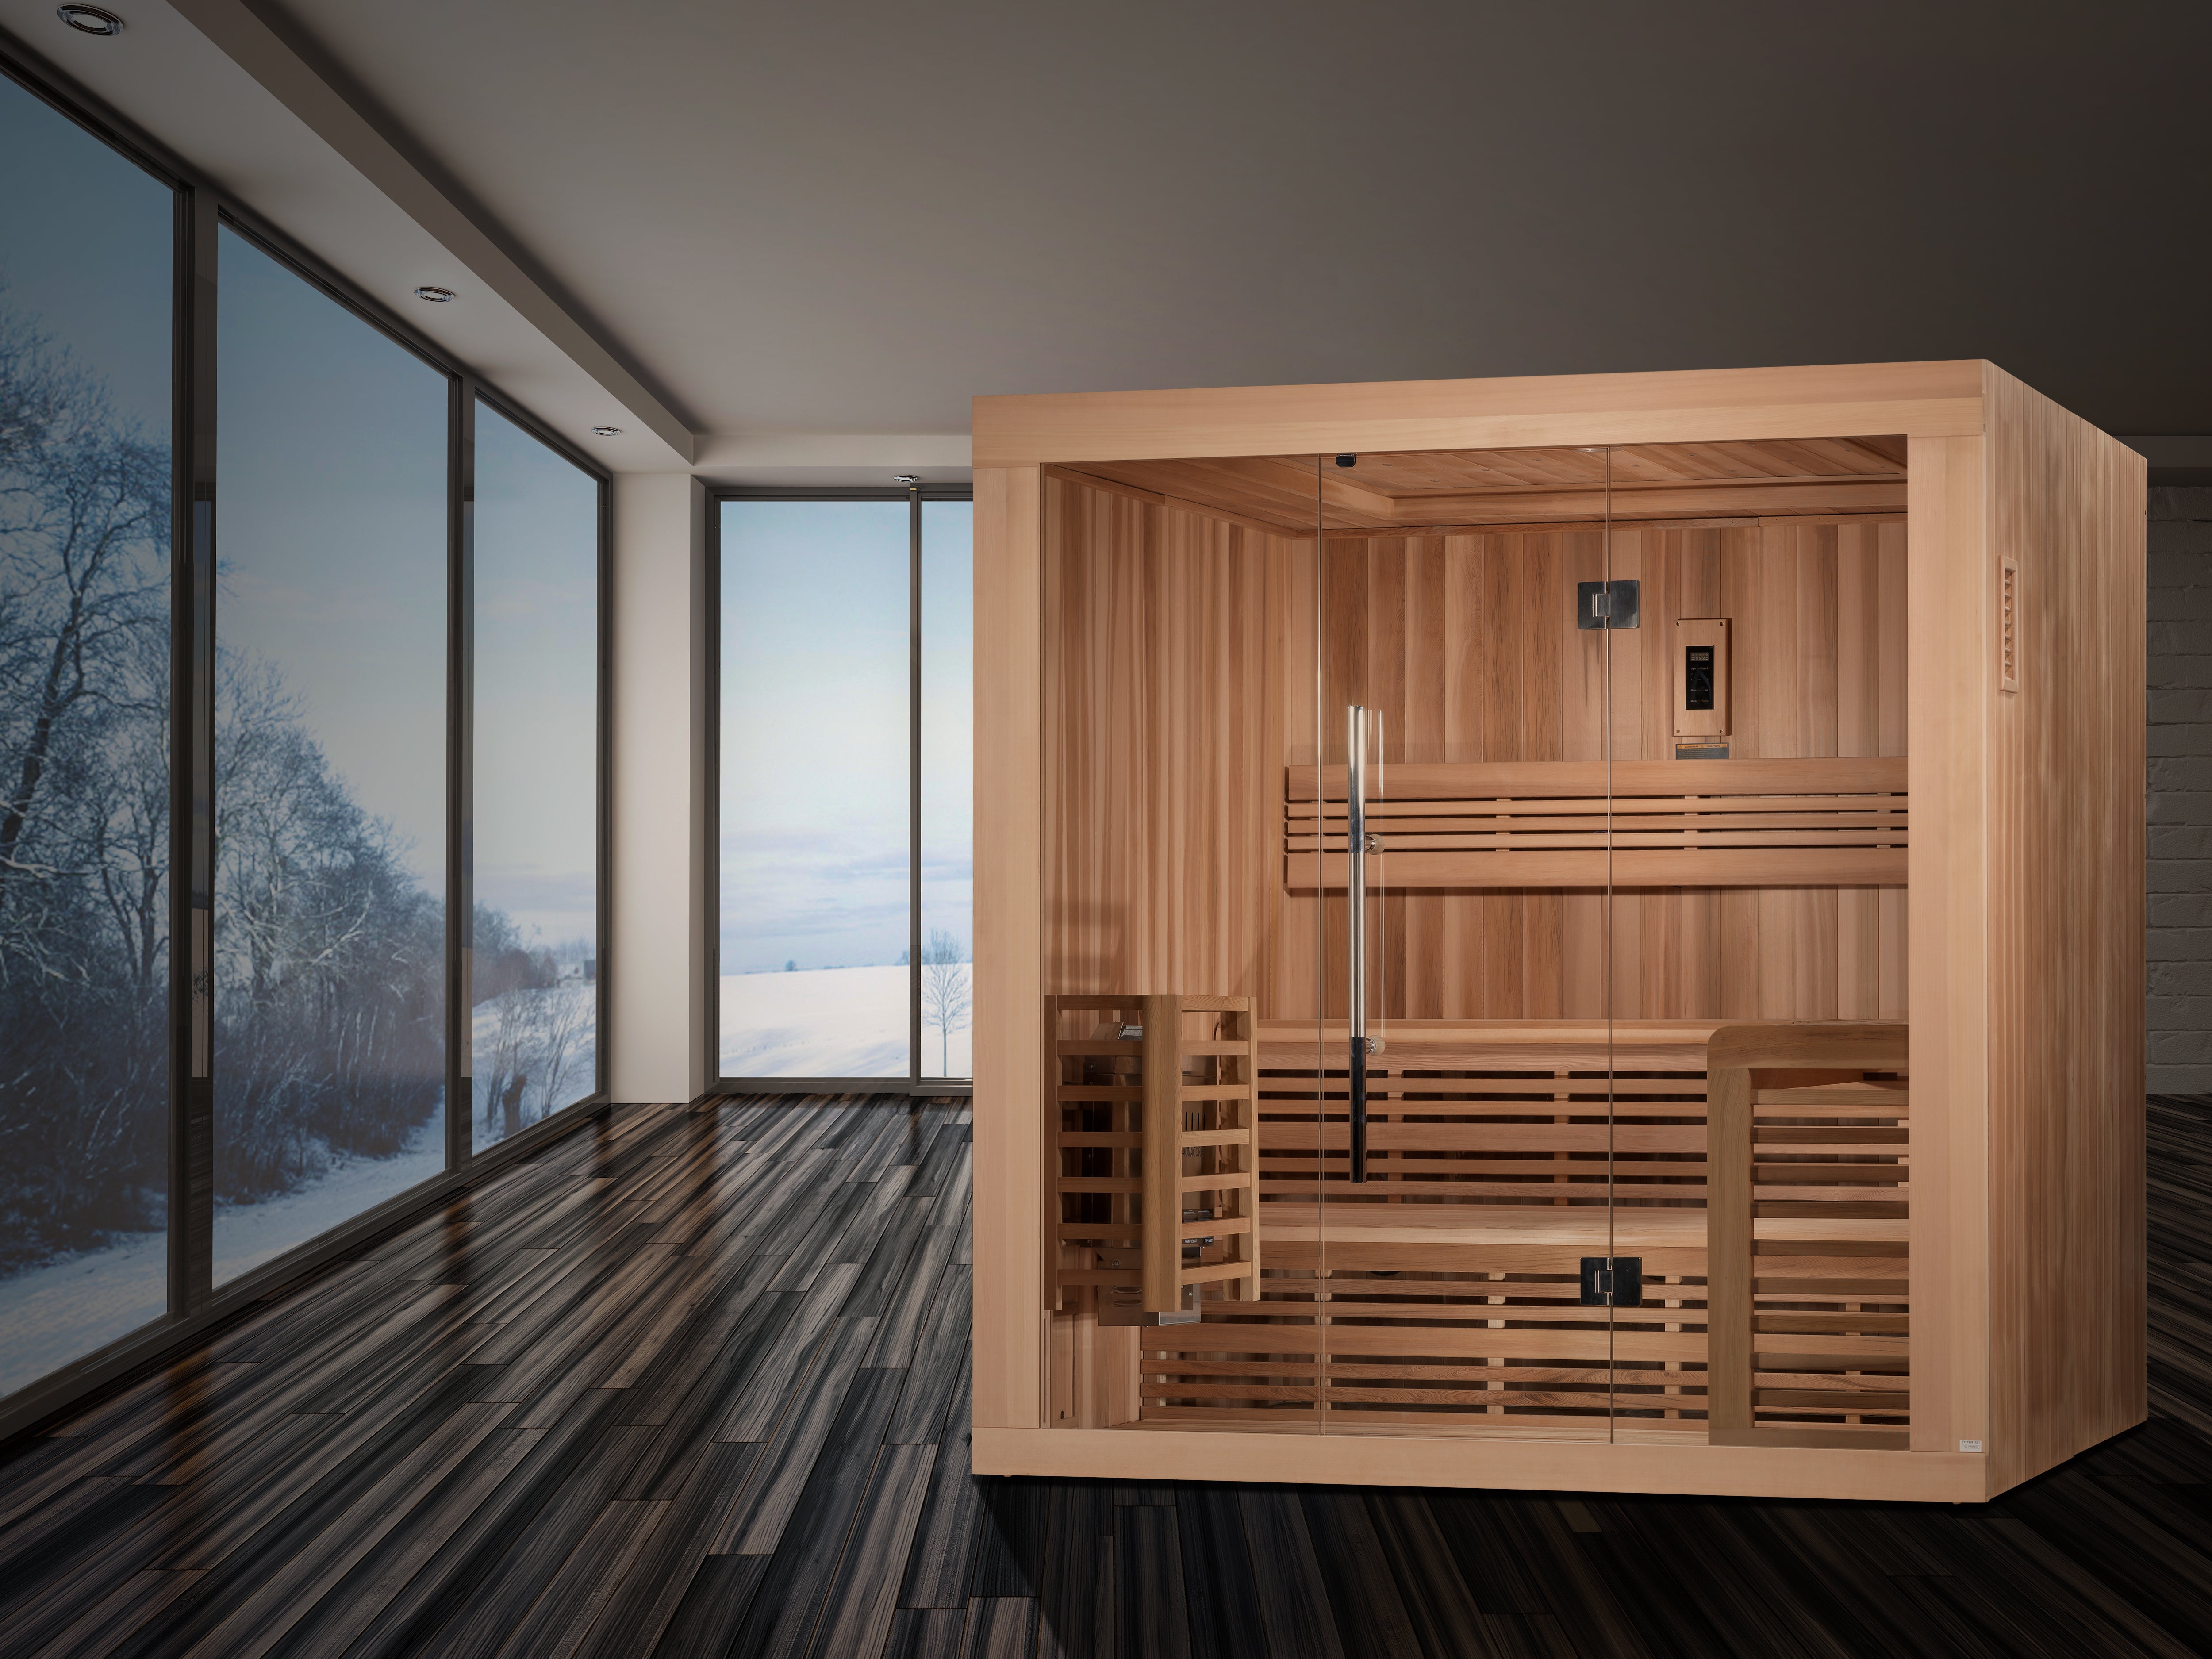 Dynamic Traditional Indoor Sauna GDI‐7689‐01 Osla Edition - Poolstoreconnect